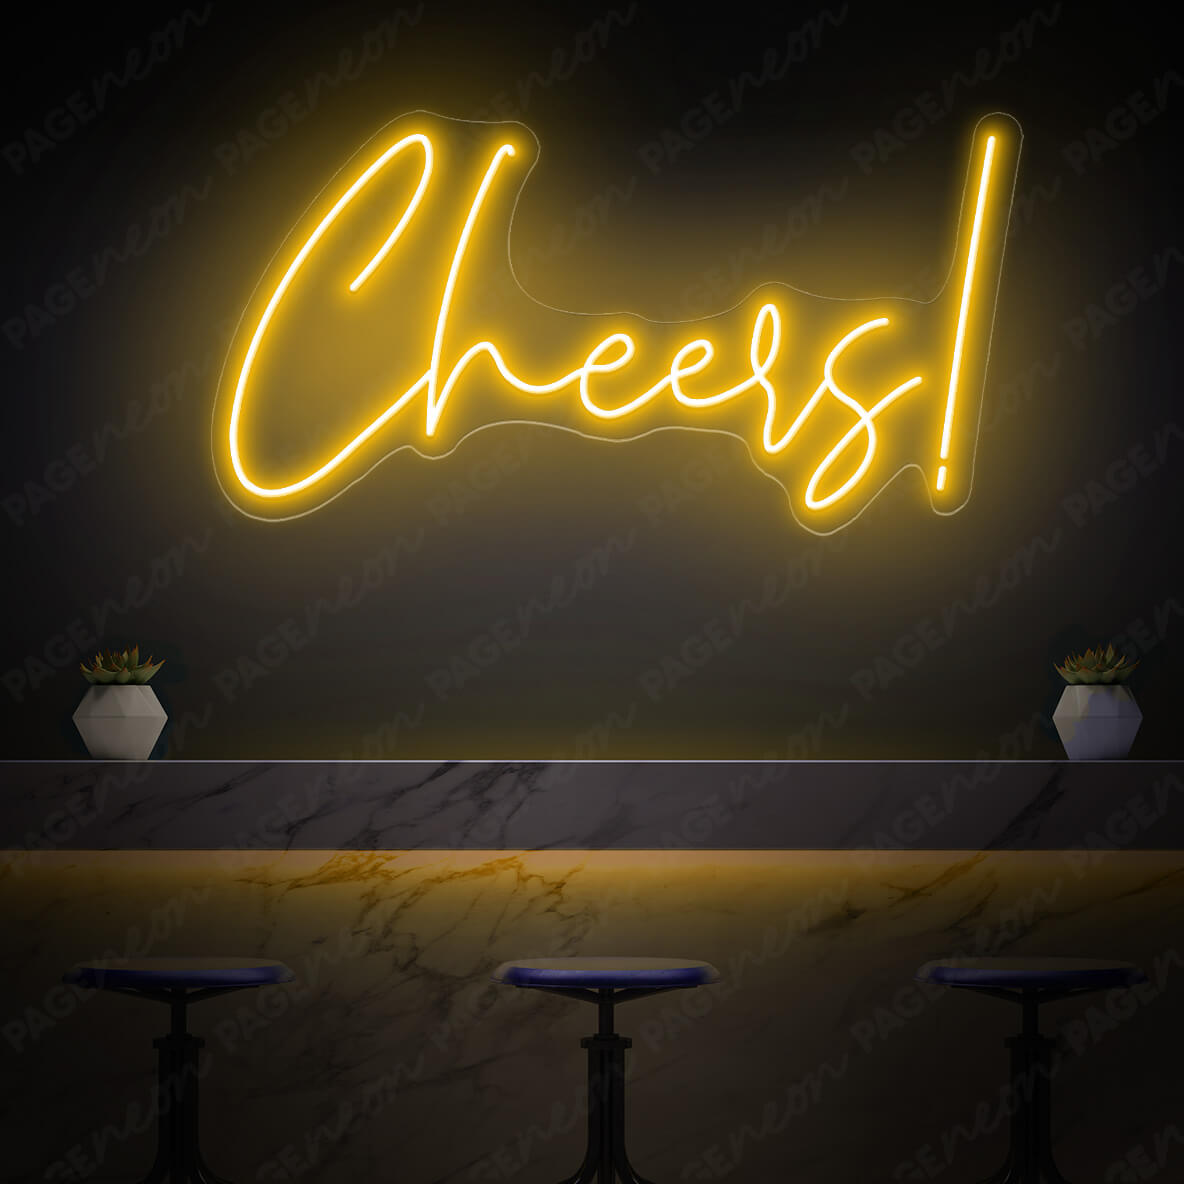 Cheers Neon Sign Bar Led Light Orange Yellow